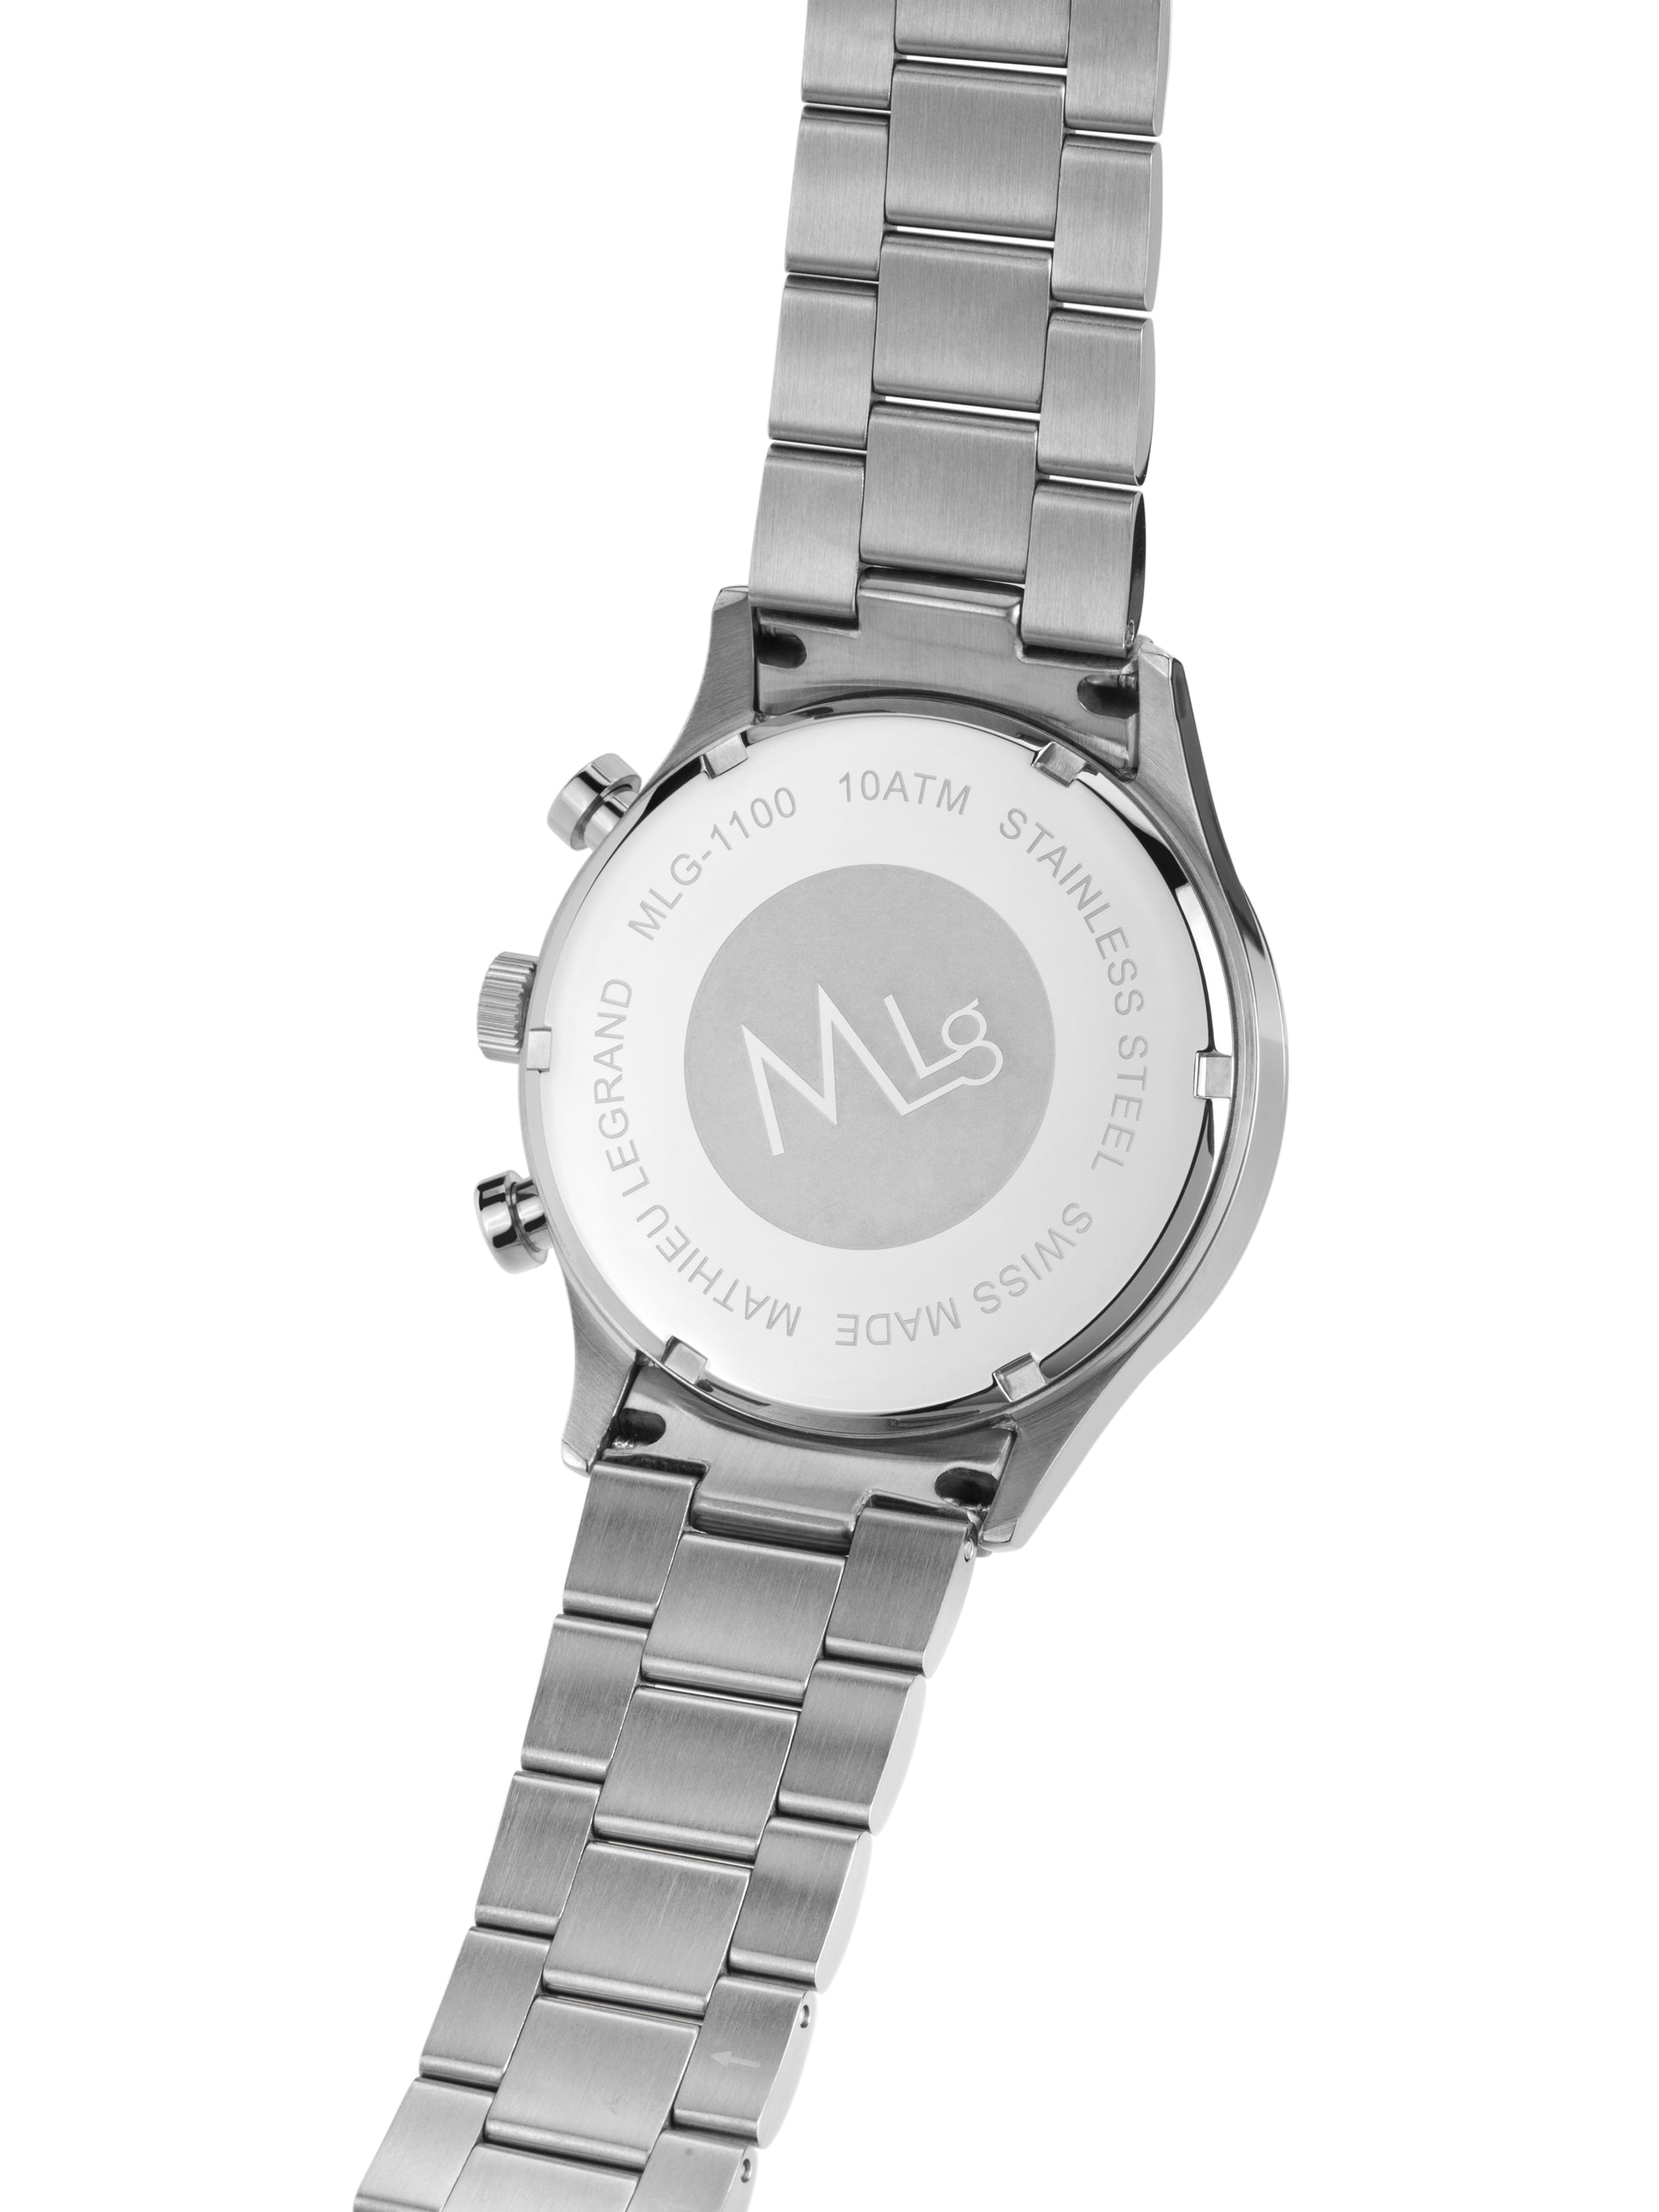 Automatic watches — Métropolitain — Mathieu Legrand — steel black steel